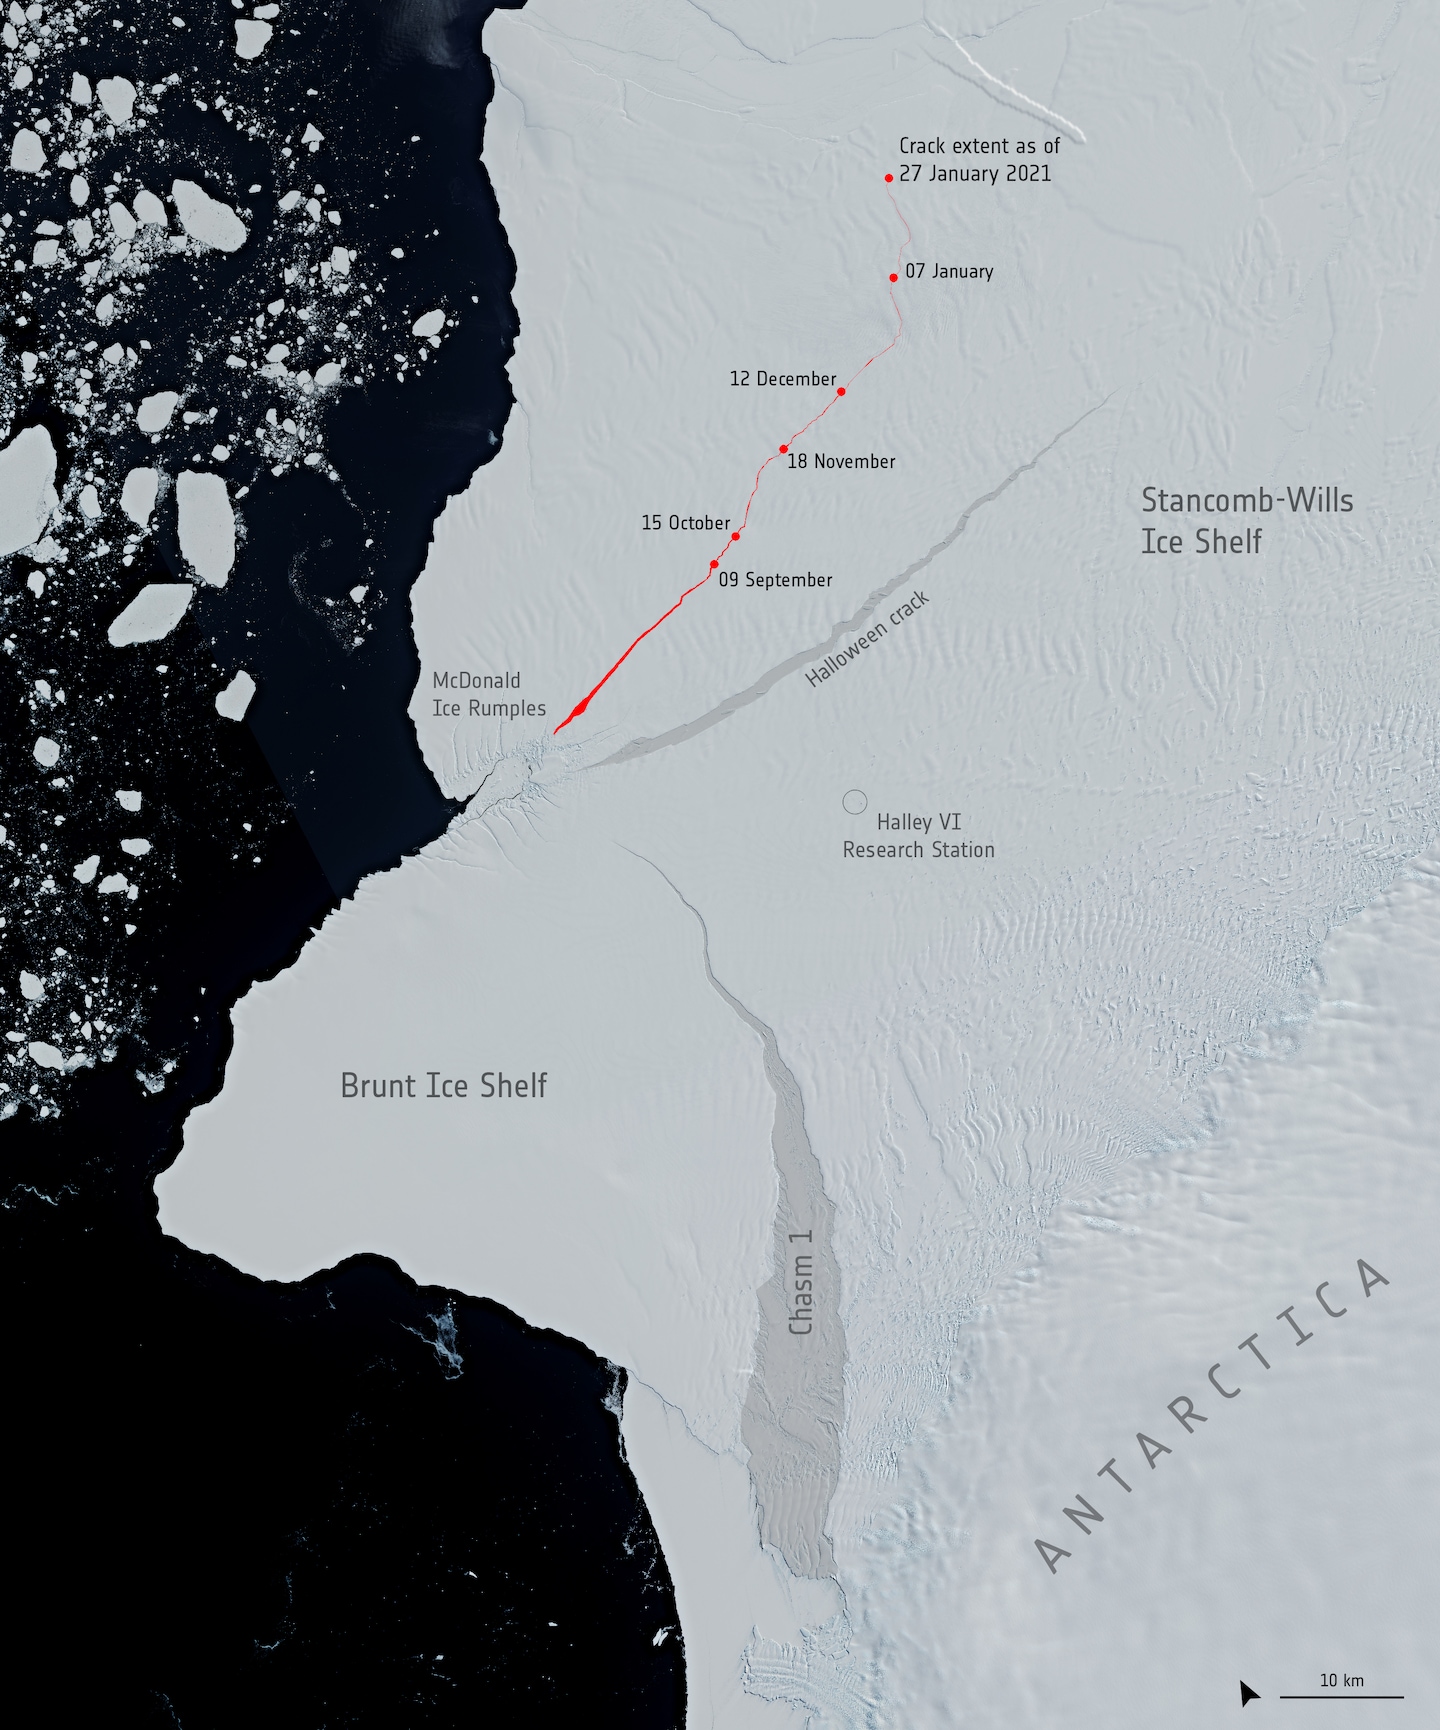 Iceberg larger than New York City breaks off the Brunt Ice Shelf in Antarctica